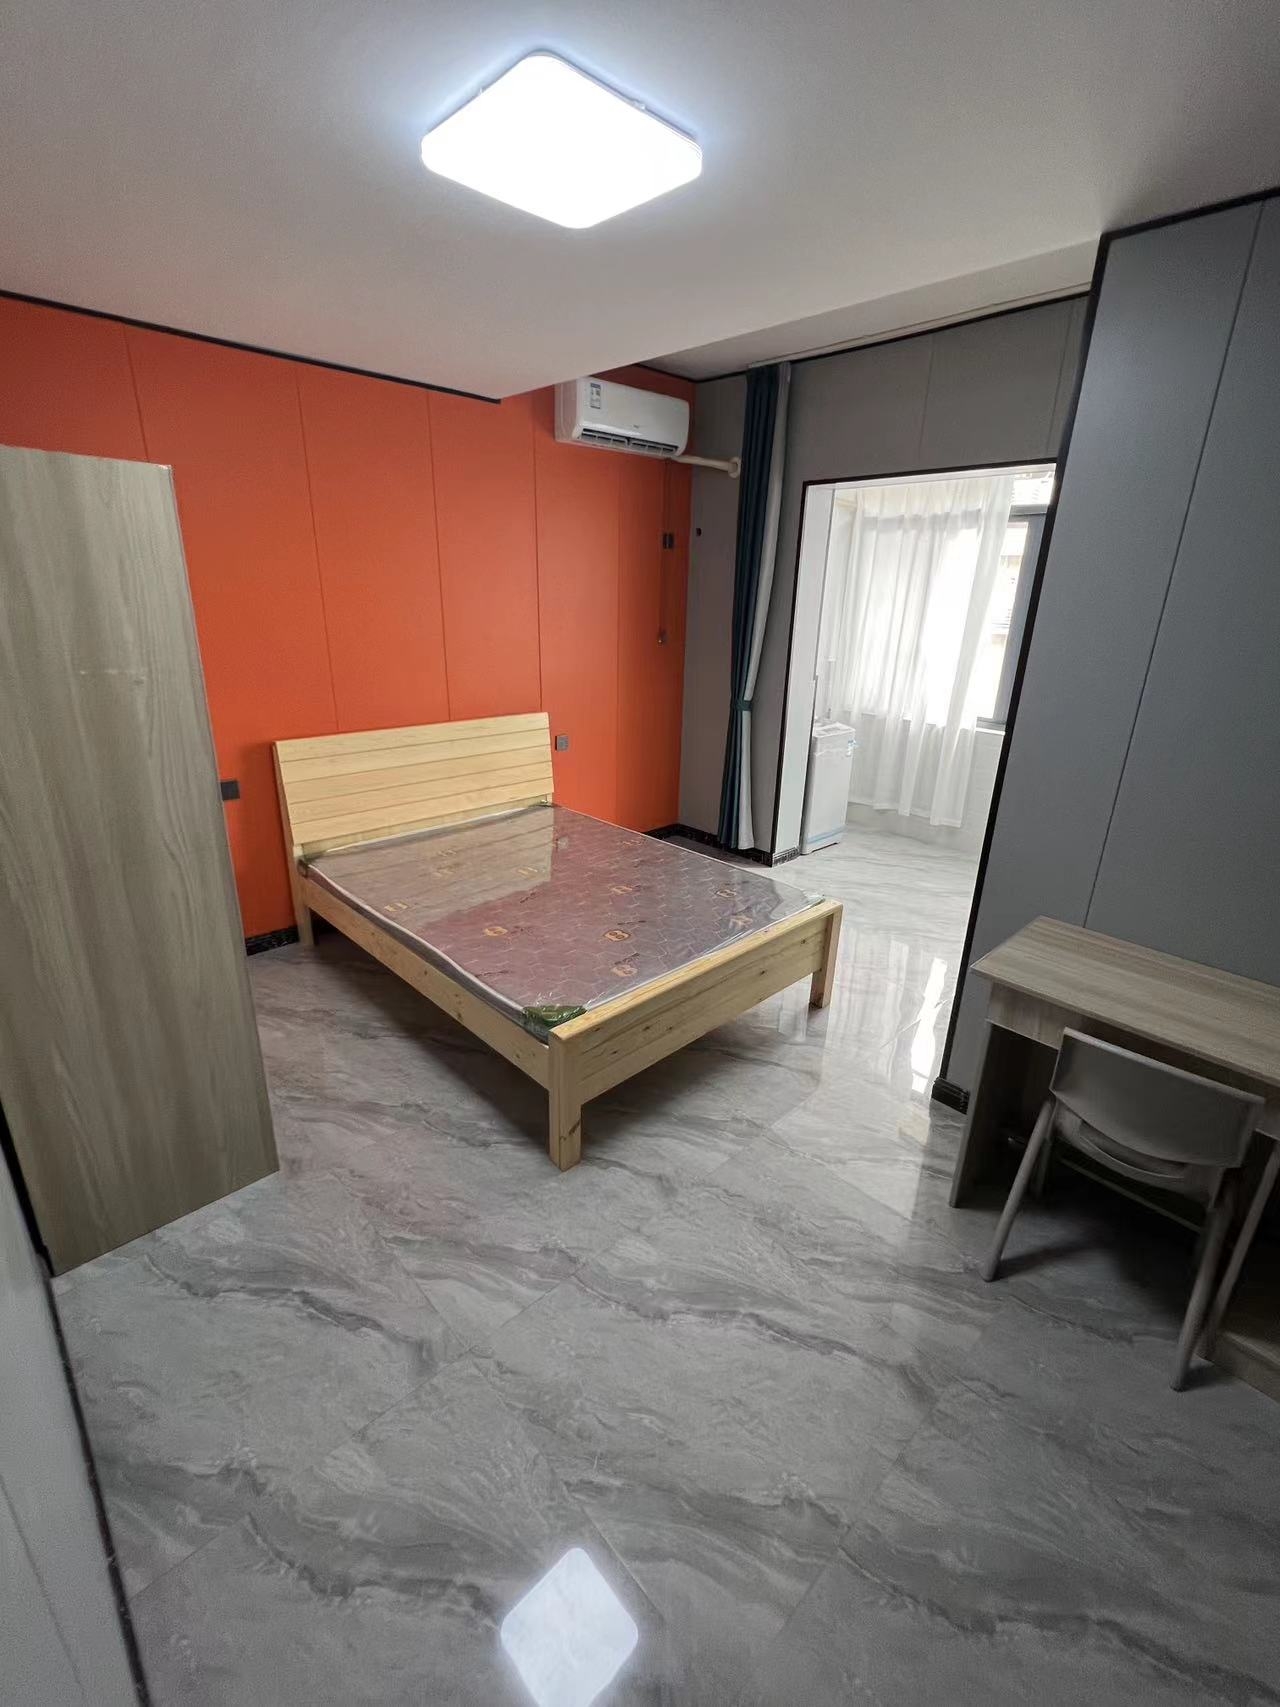 Hangzhou-Xihu-Cozy Home,Clean&Comfy,No Gender Limit,Chilled